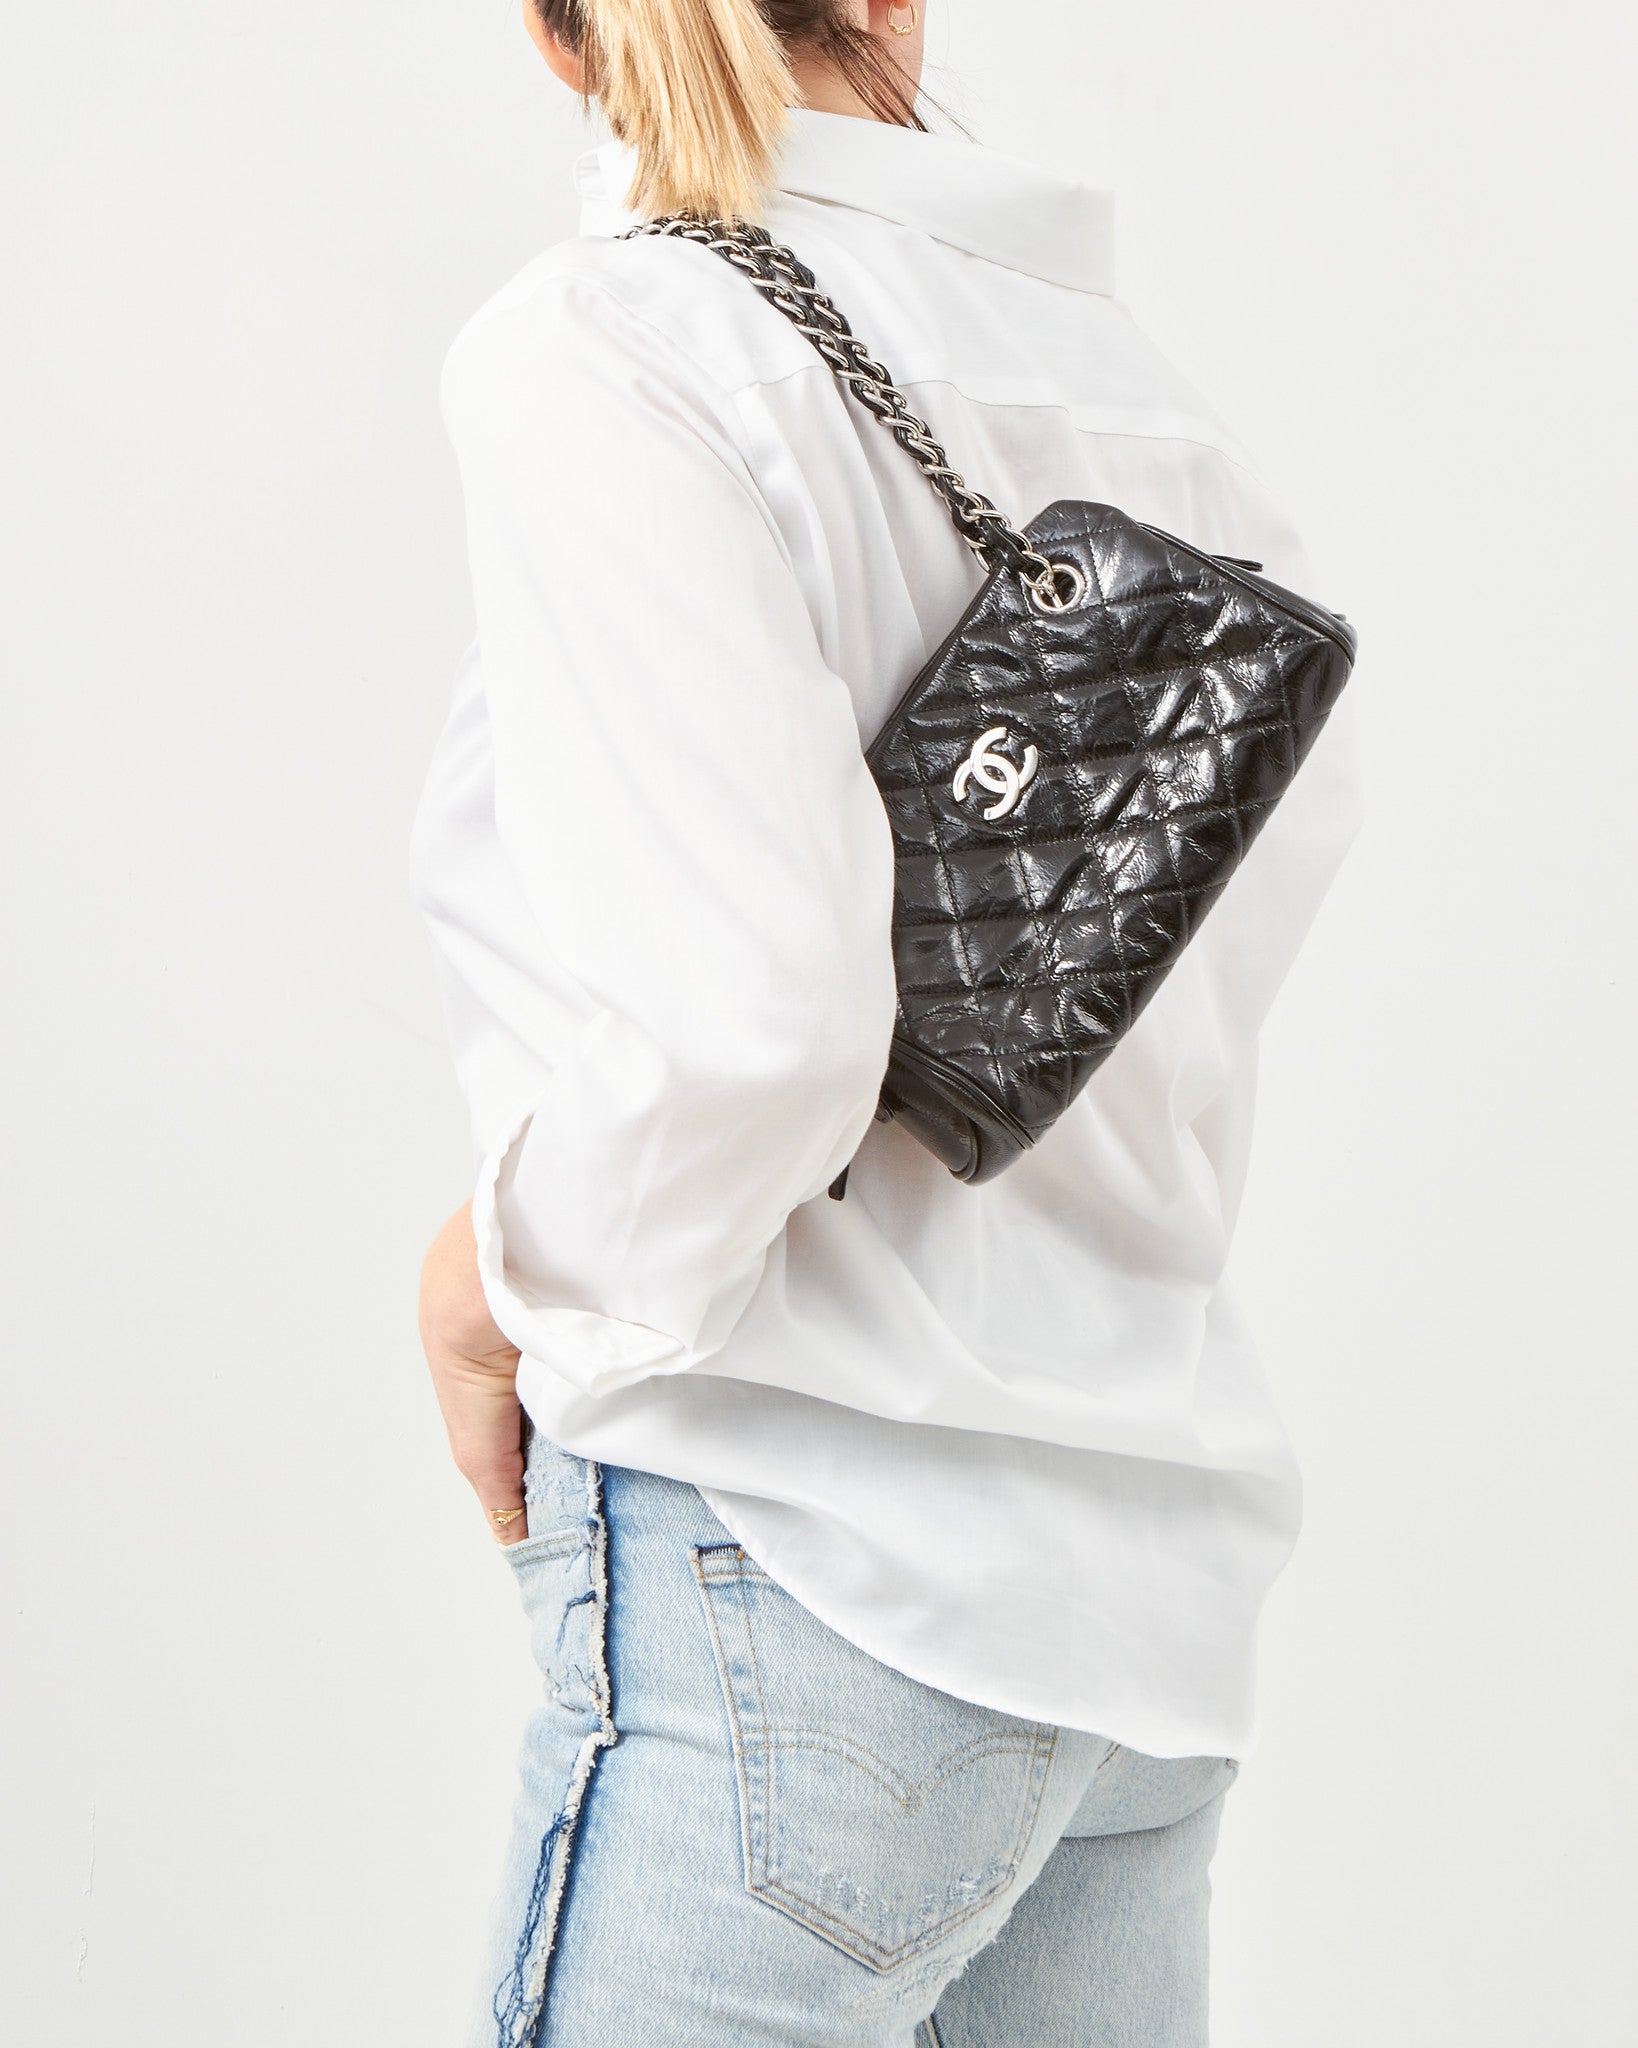 Chanel Black Patent Calfskin CC Logo Small Zip Chain Shoulder Bag